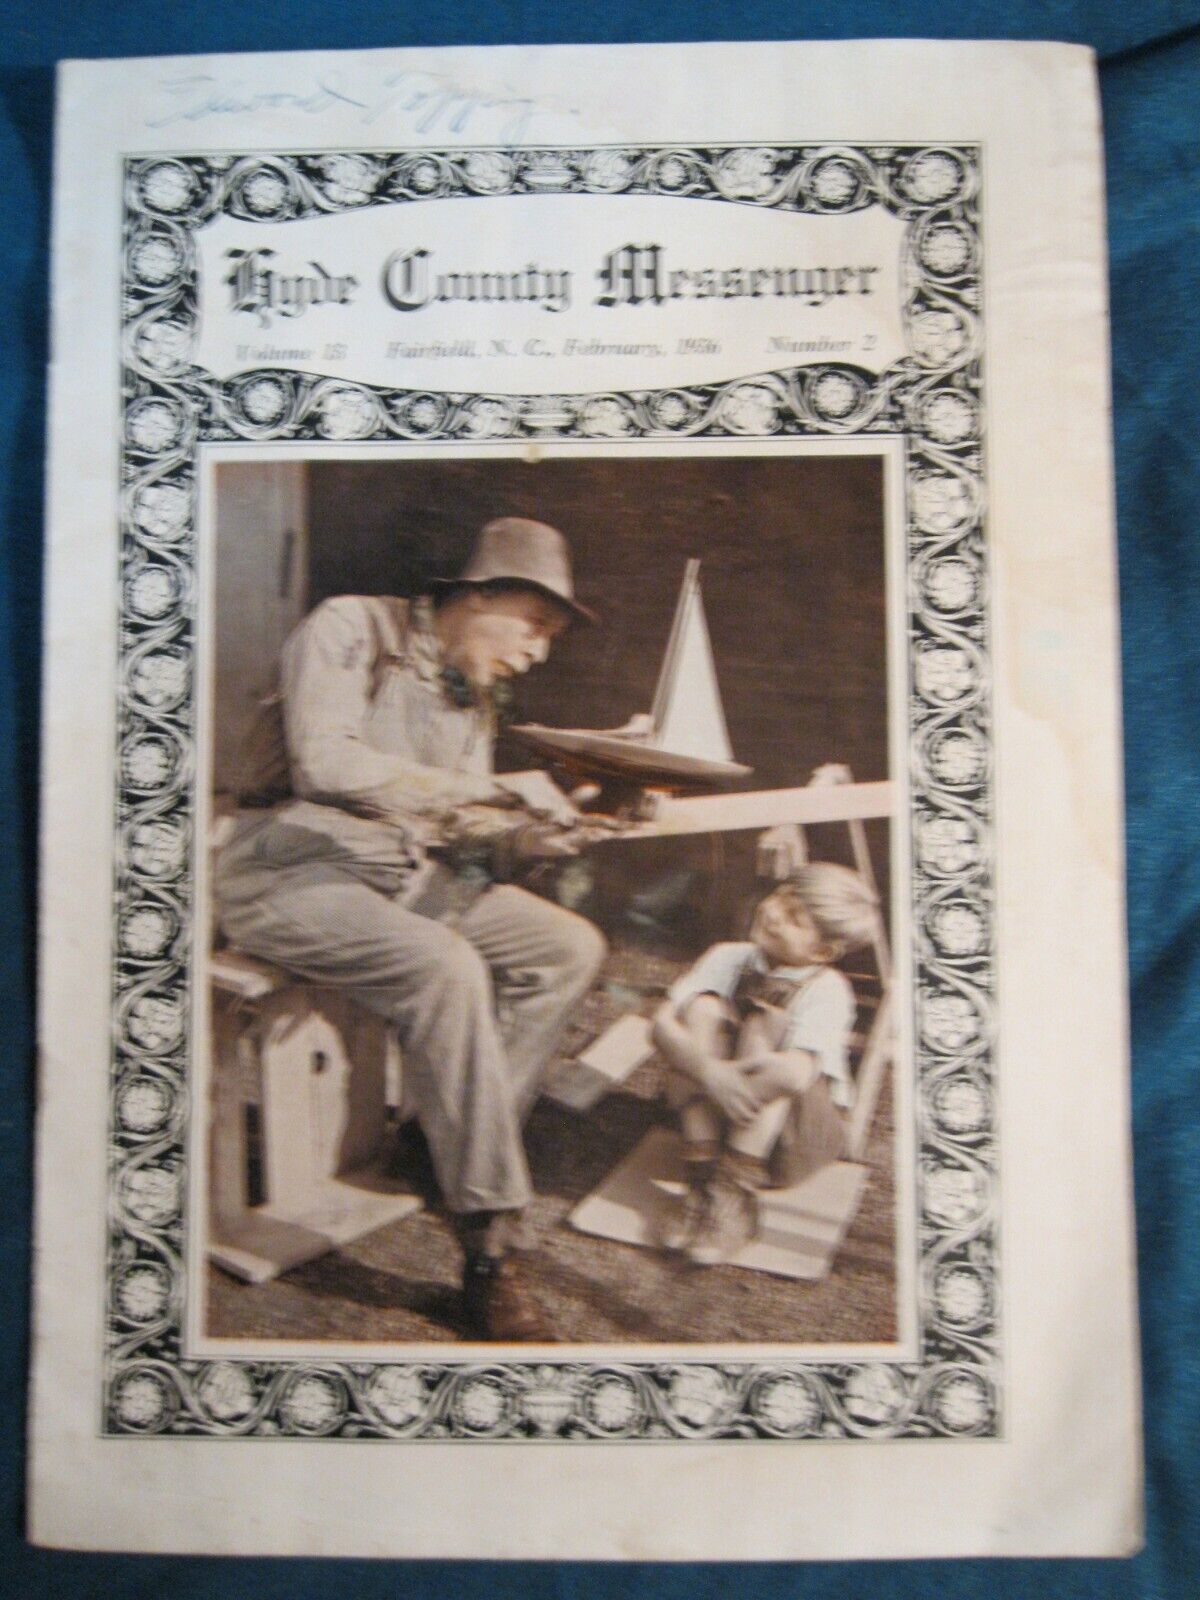 1936 Hyde County Messenger Fairfield, North Carolina Rev. Elliott Stewart editor